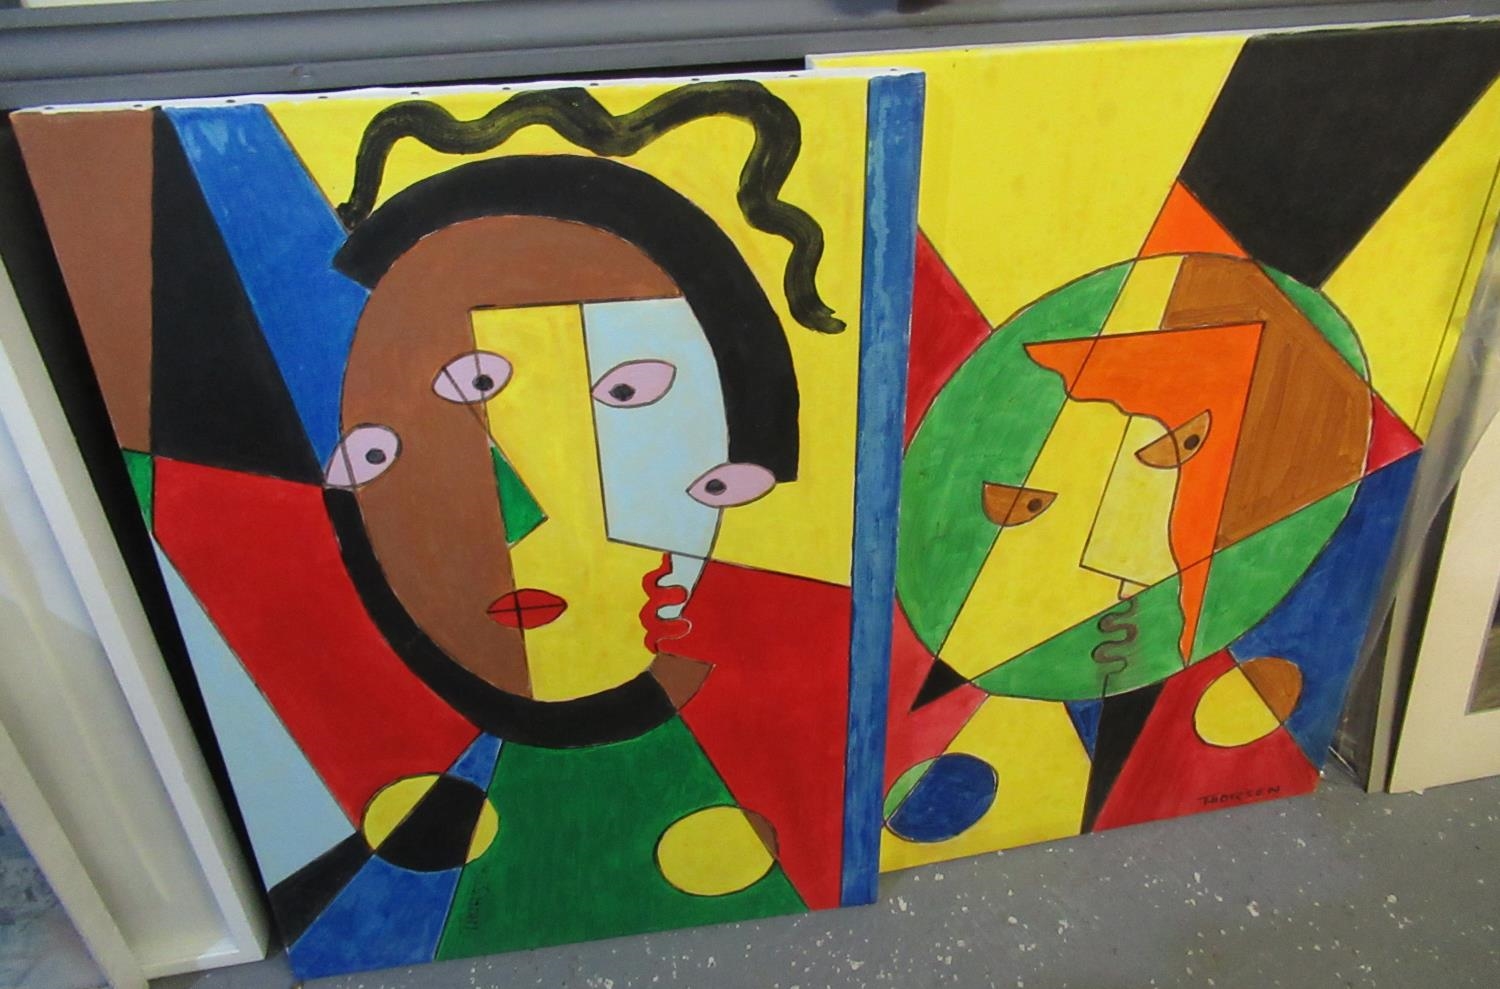 Abstract portrait studies by Kura Te Waru Rewiri, Pablo Picasso